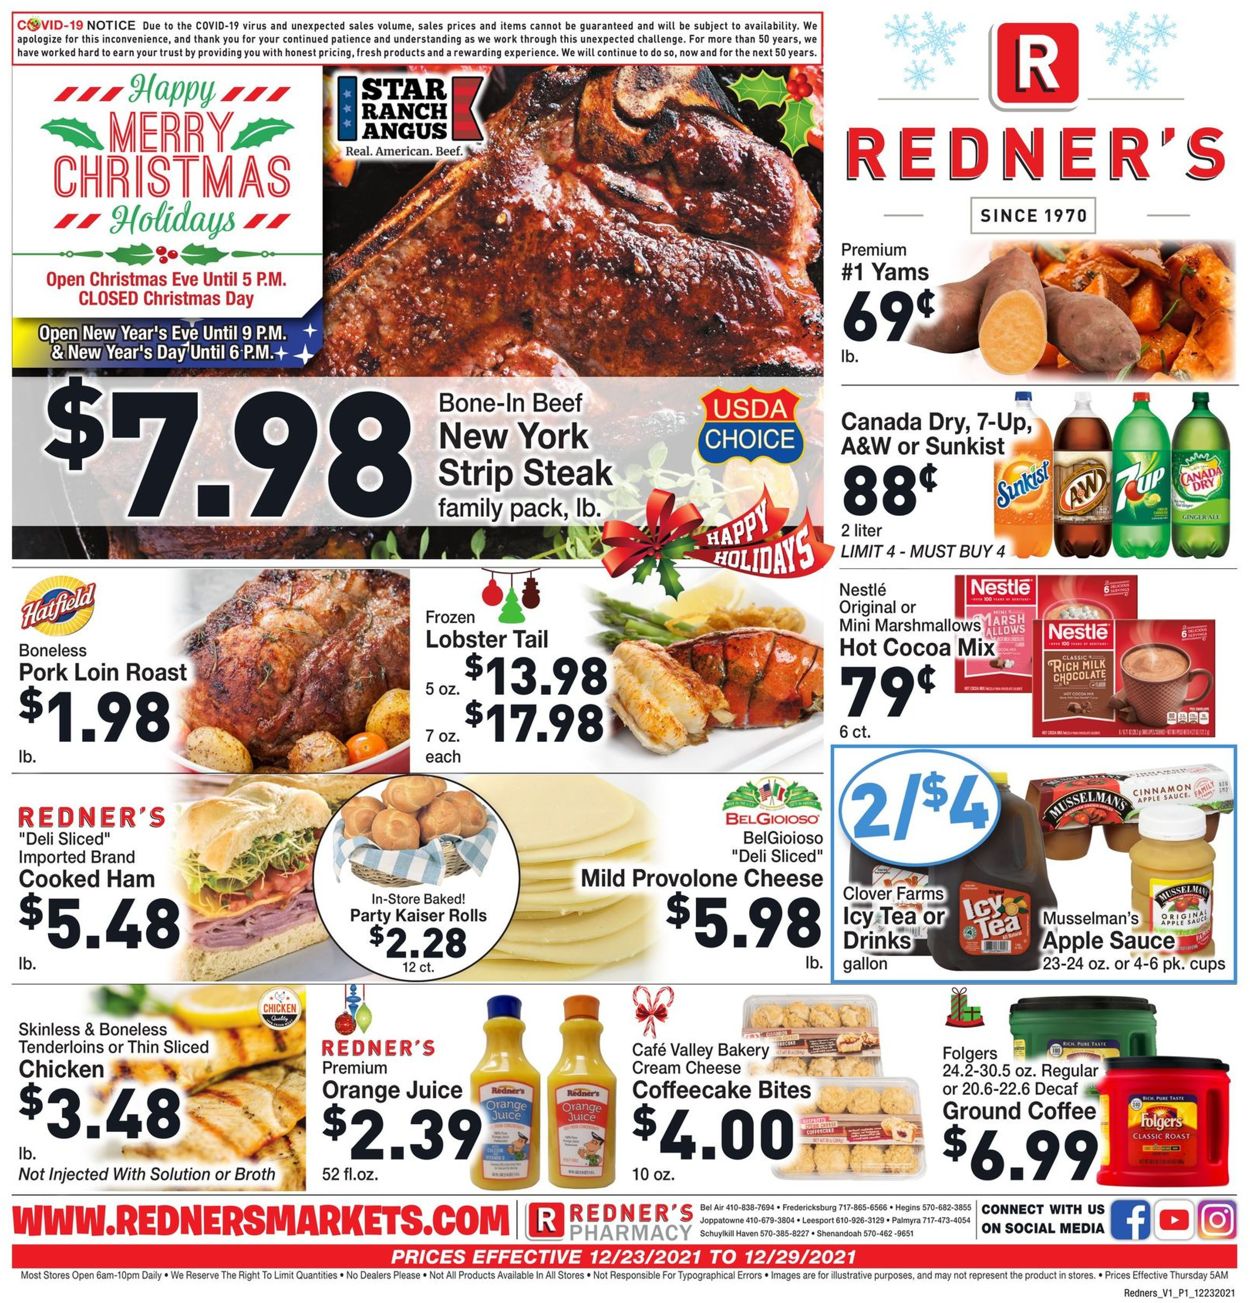 Redner’s Warehouse Market Current weekly ad 12/23 - 12/29/2021 ...